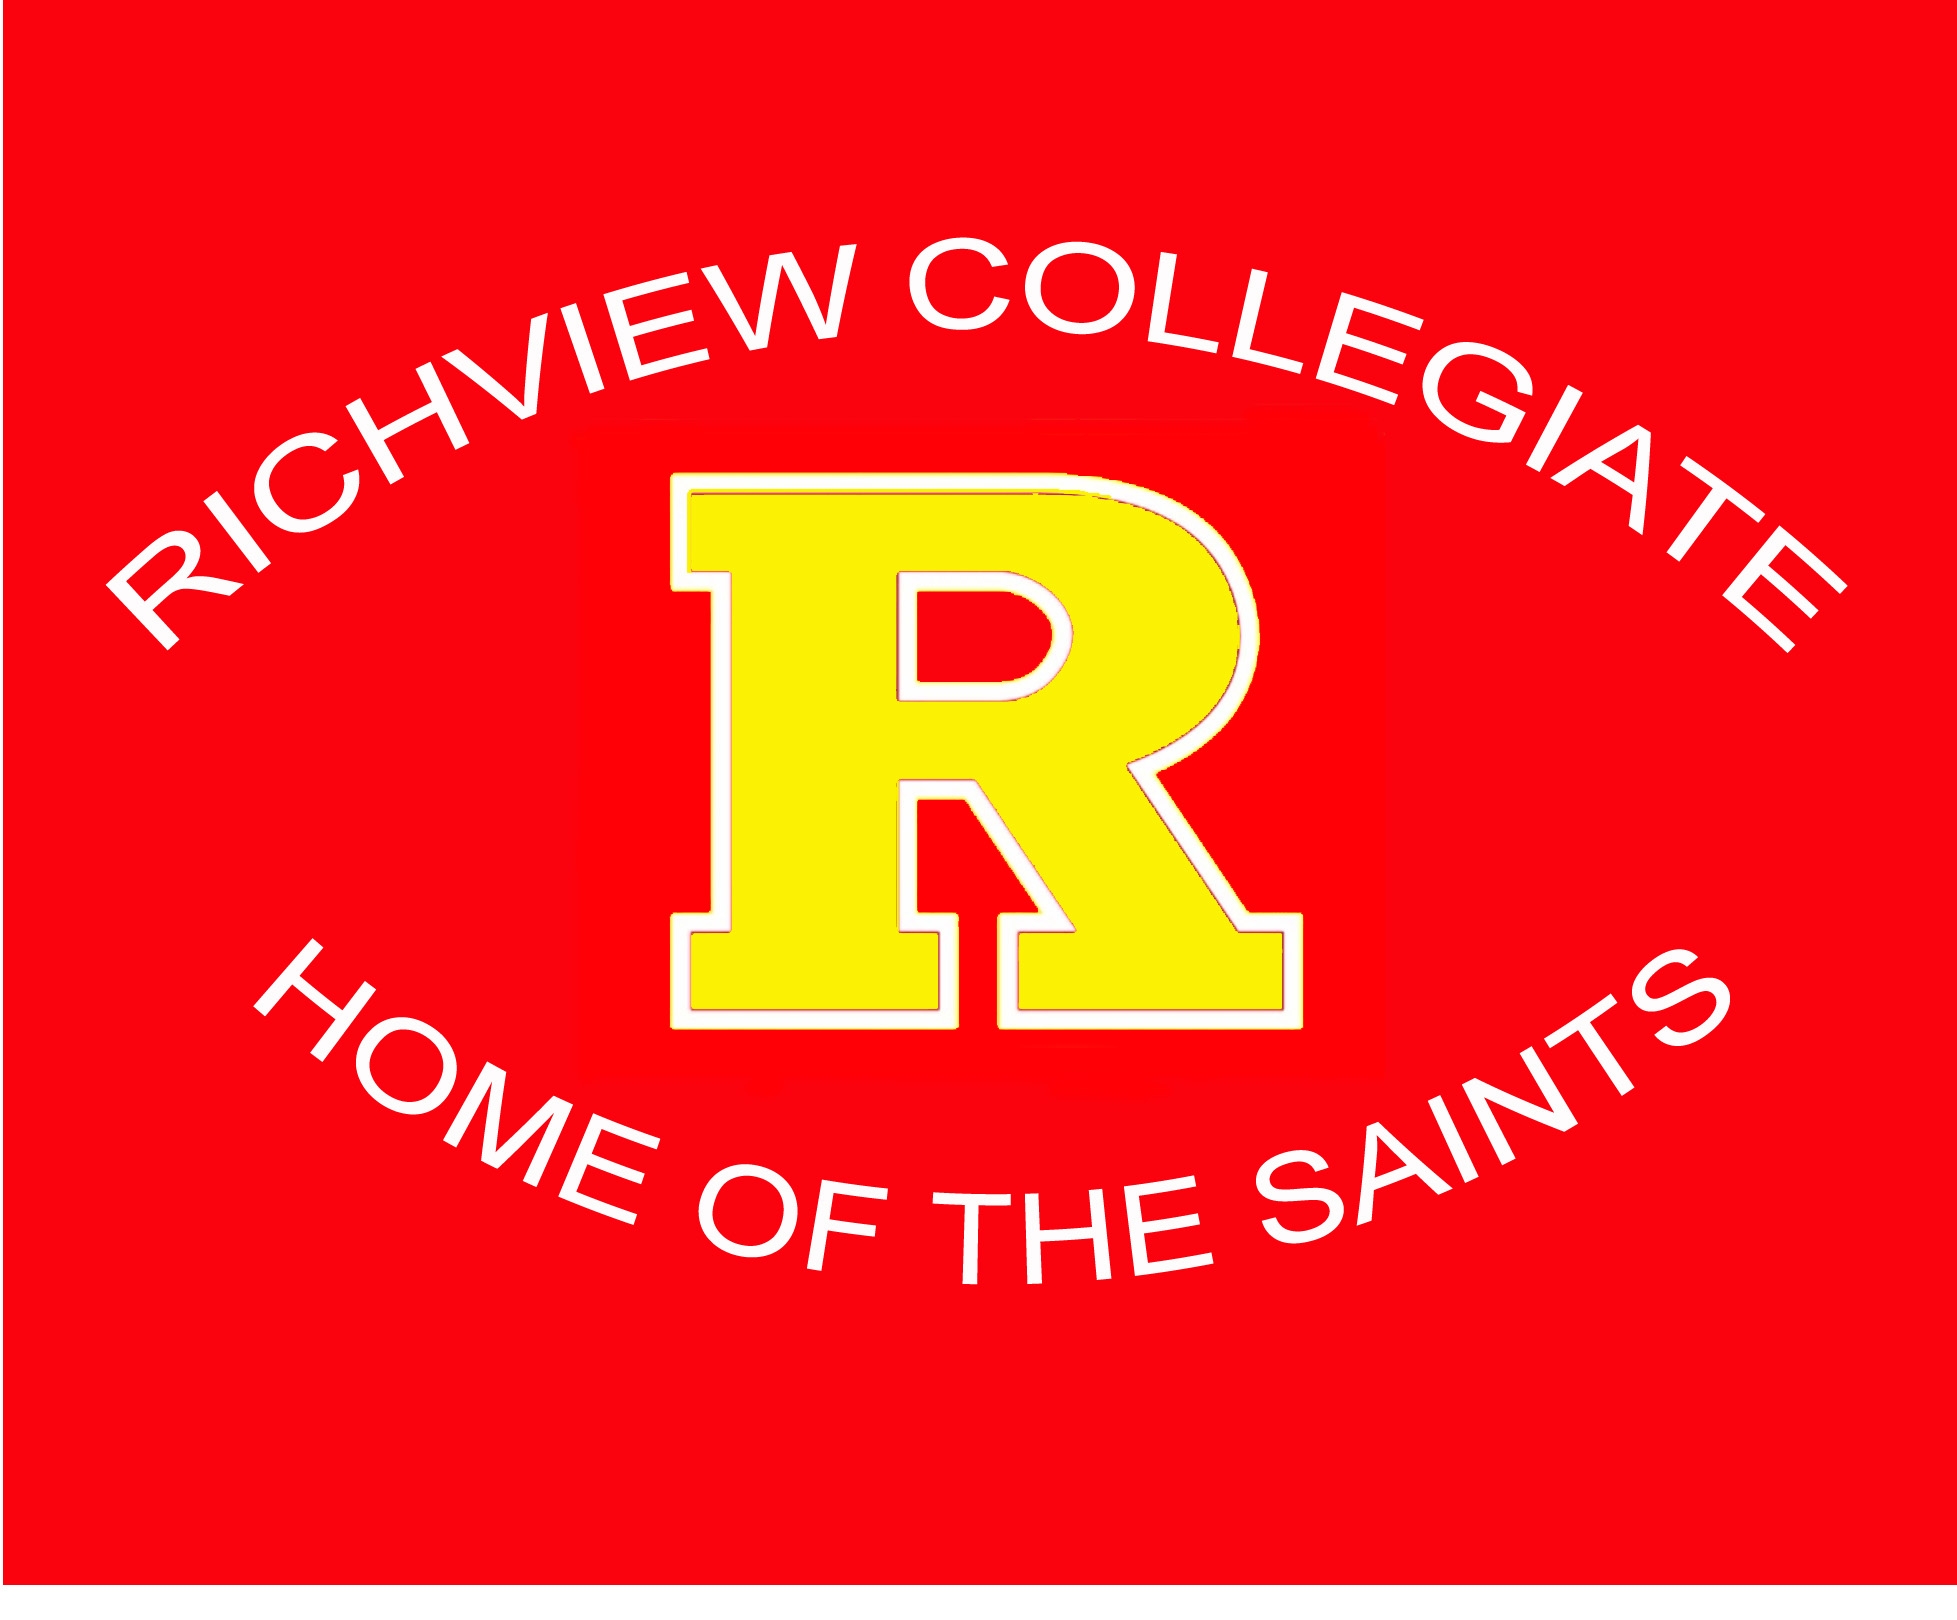 richview curricular banner 6